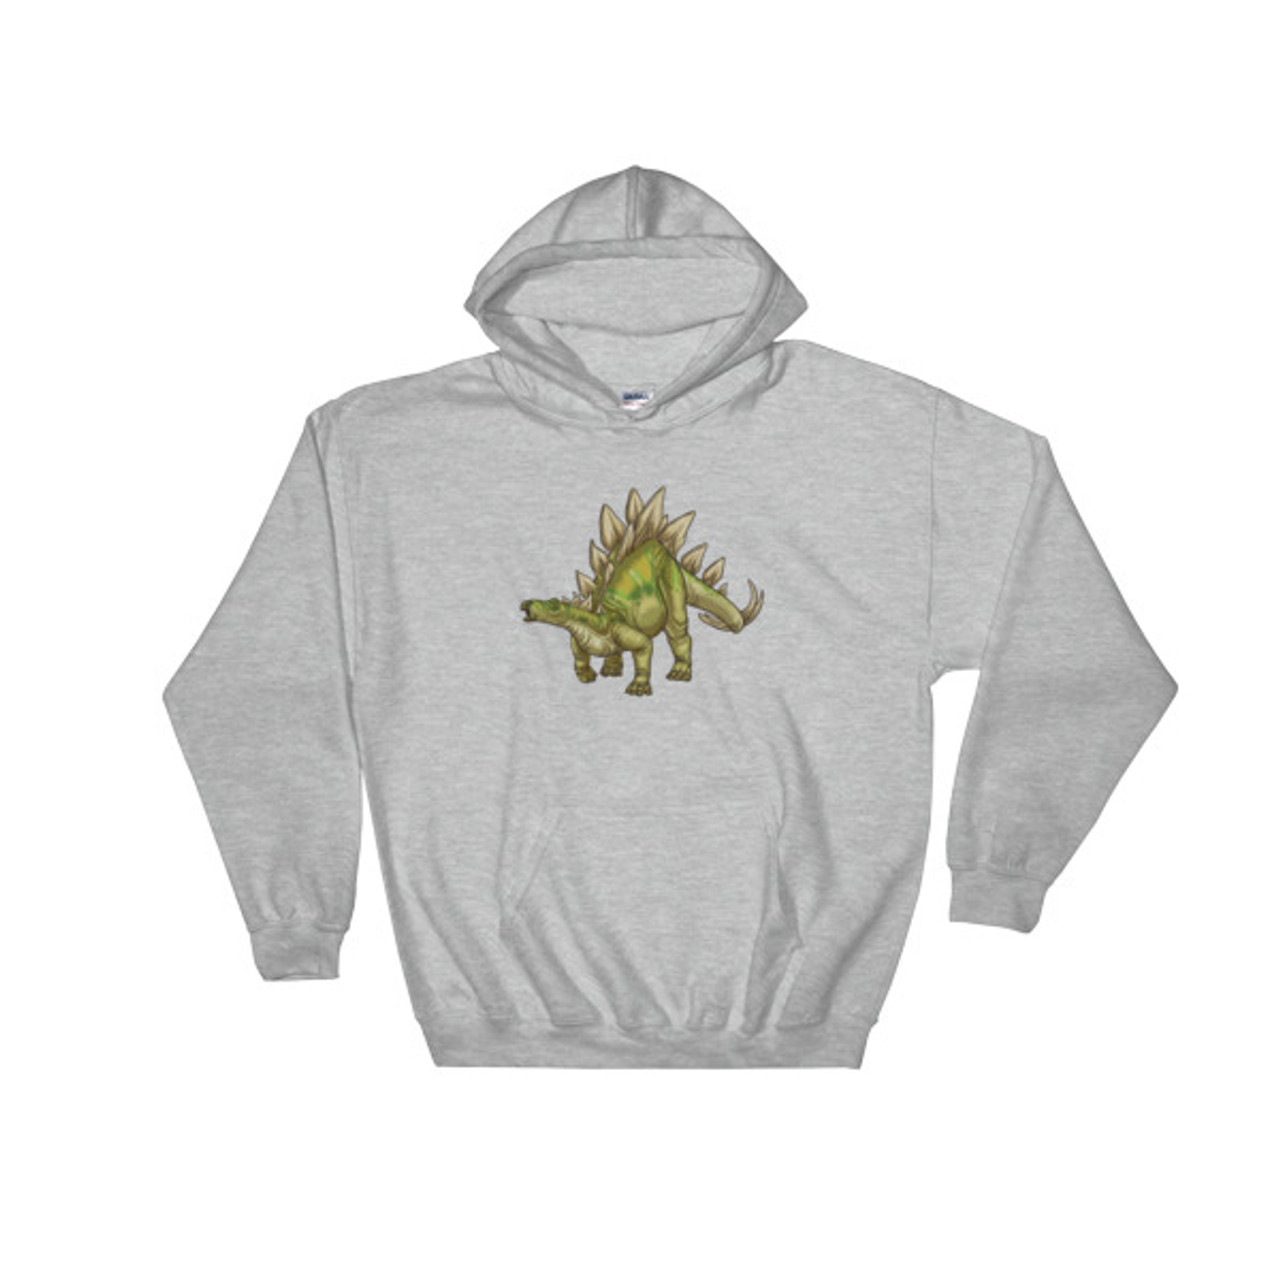 Stegosaurus Hooded Sweatshirt - The Dino Reserve